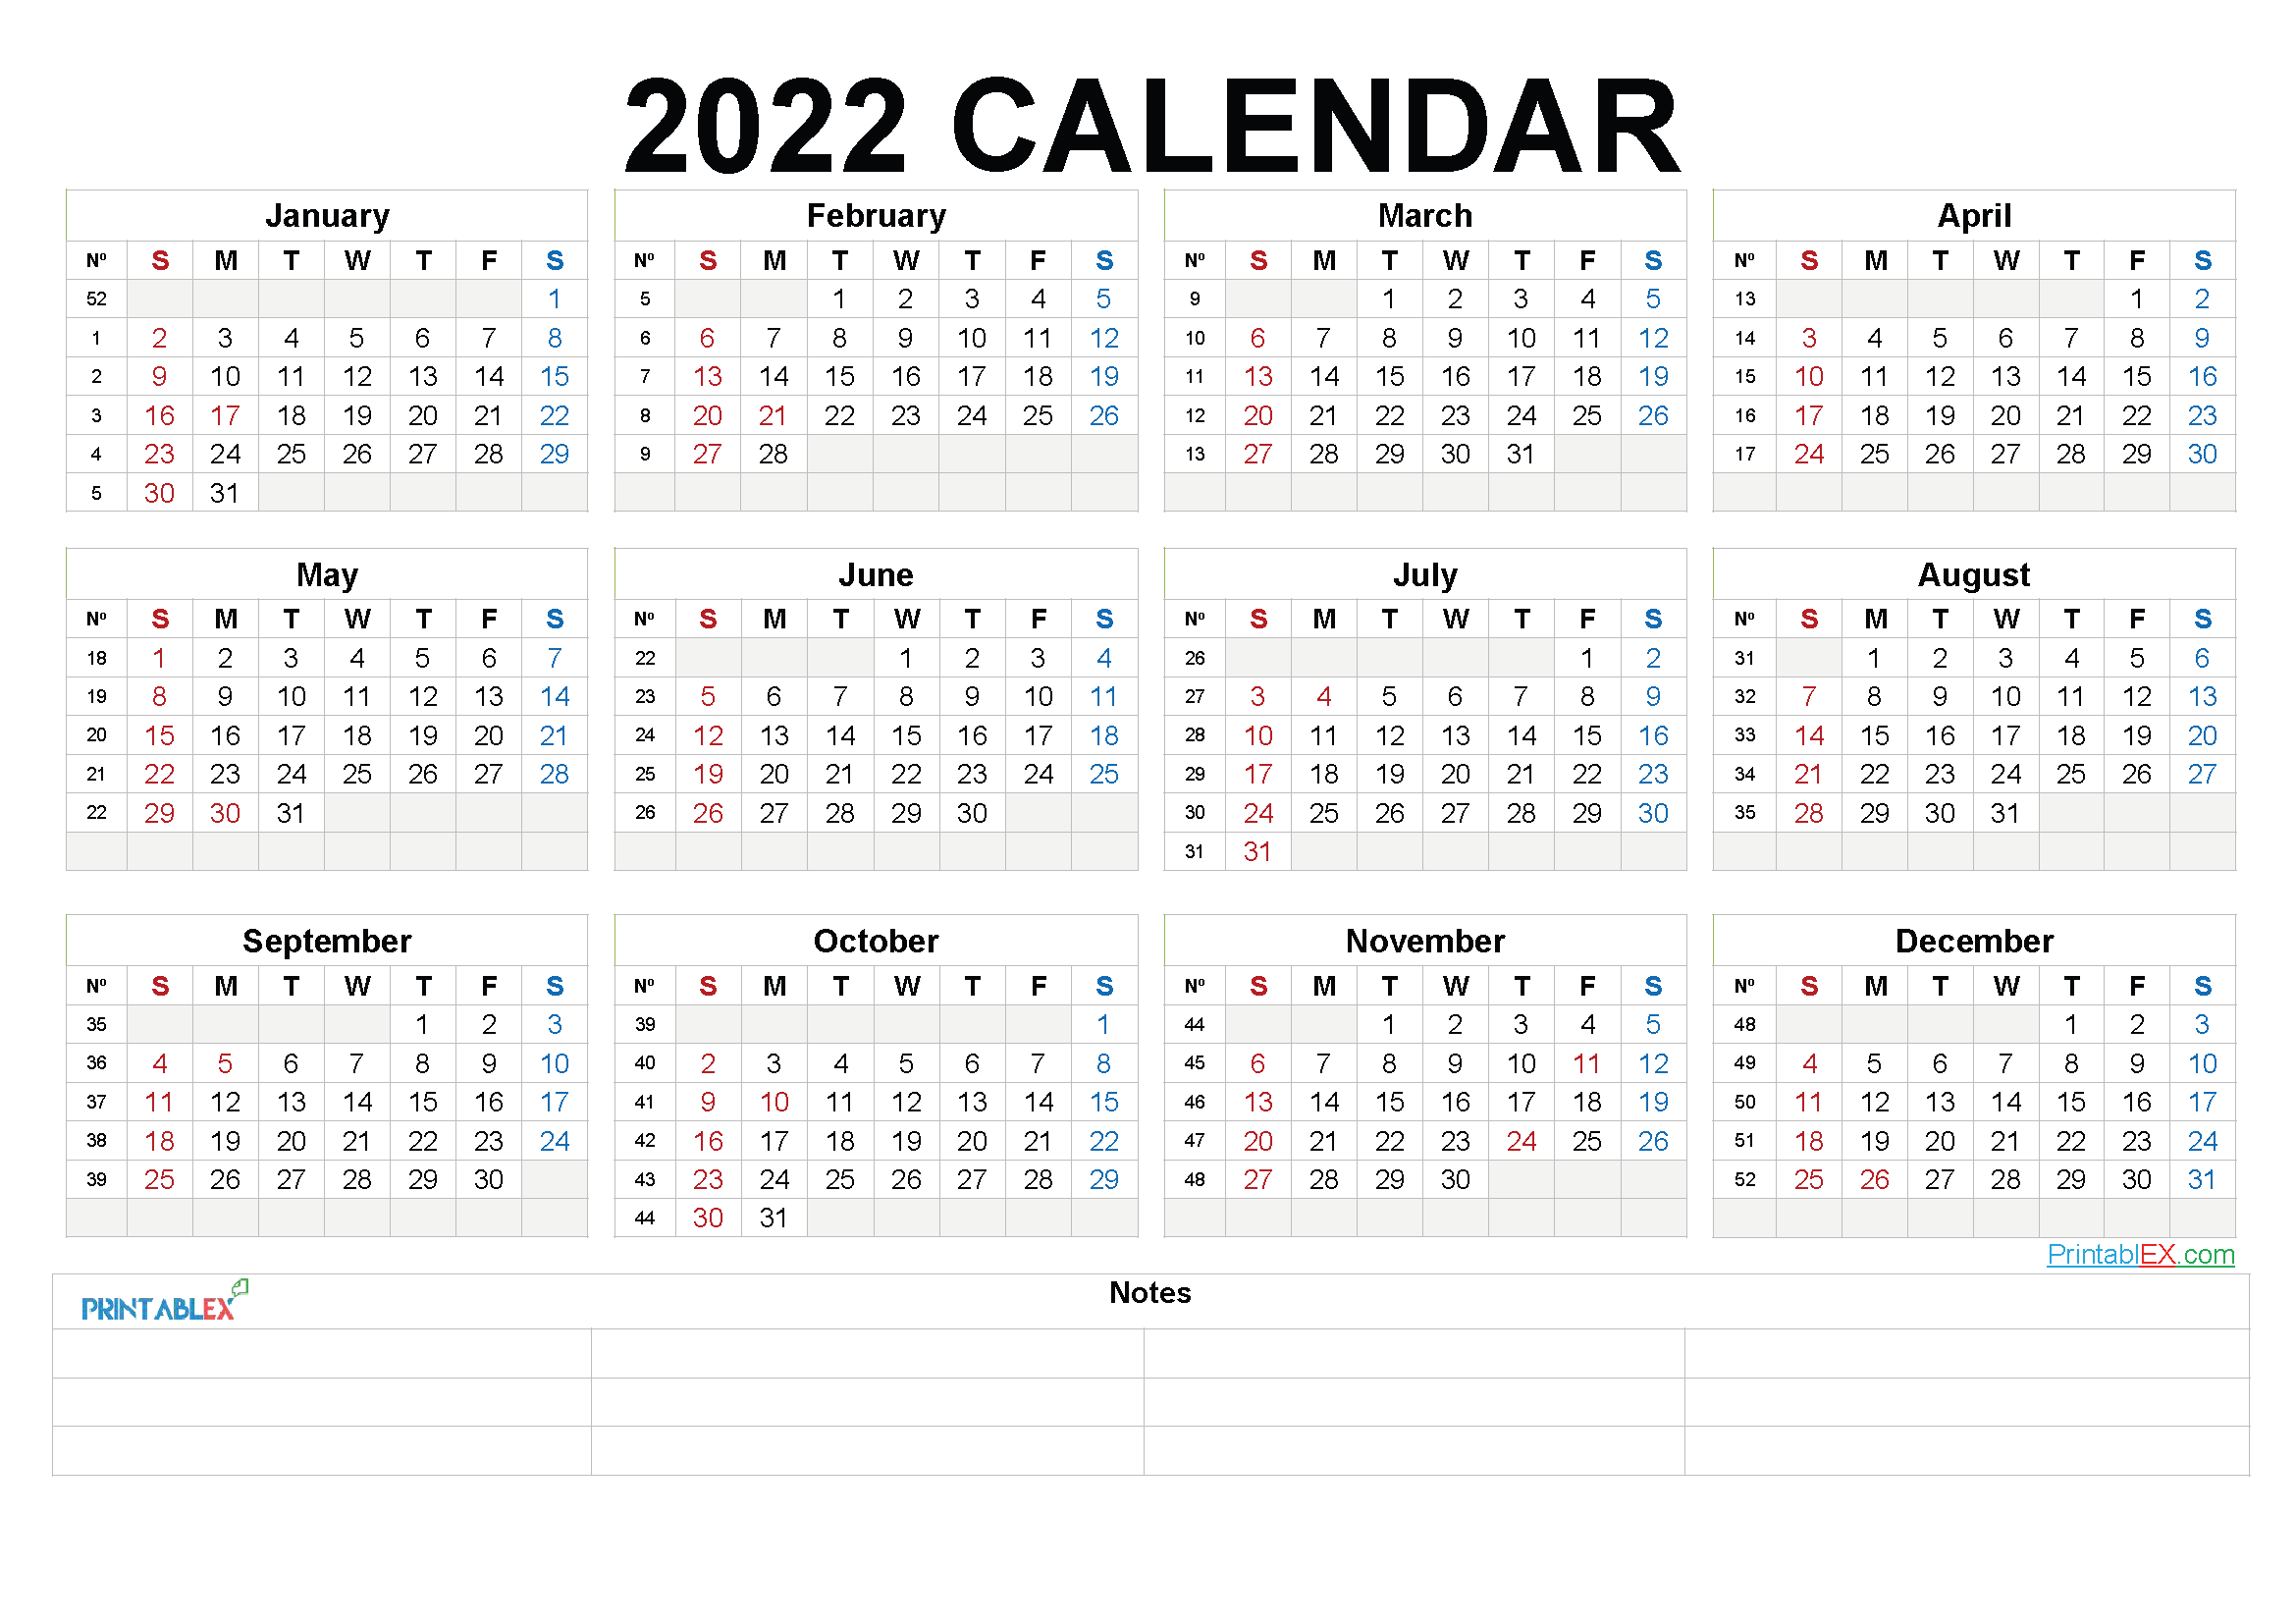 whelping-calendar-2022-printable-word-searches